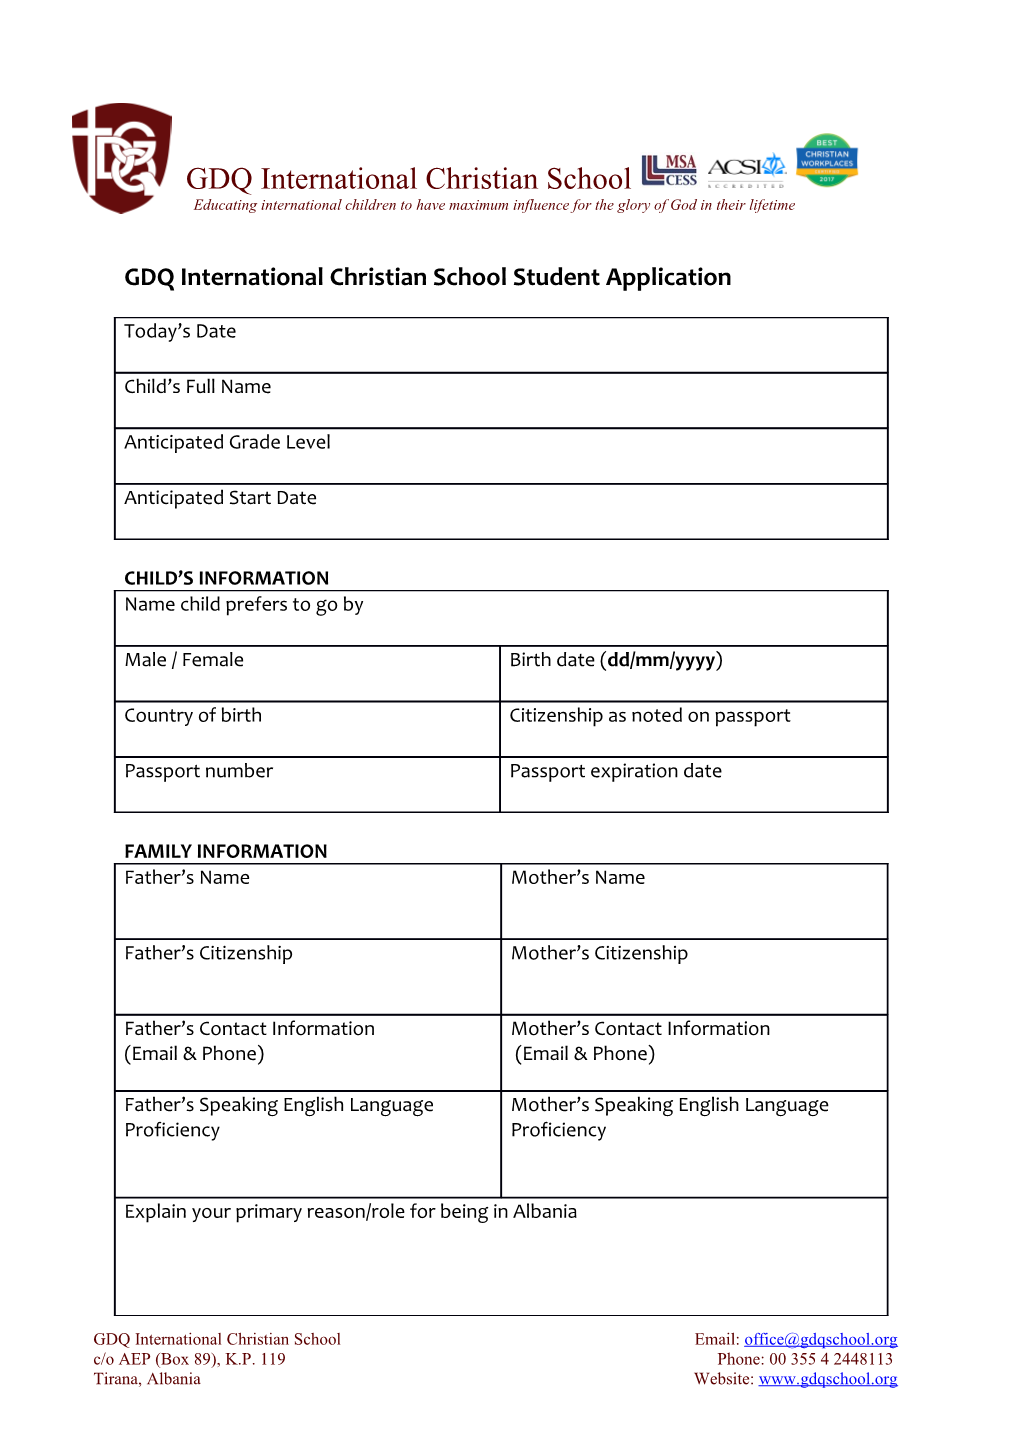 GDQ International Christian School Student Application